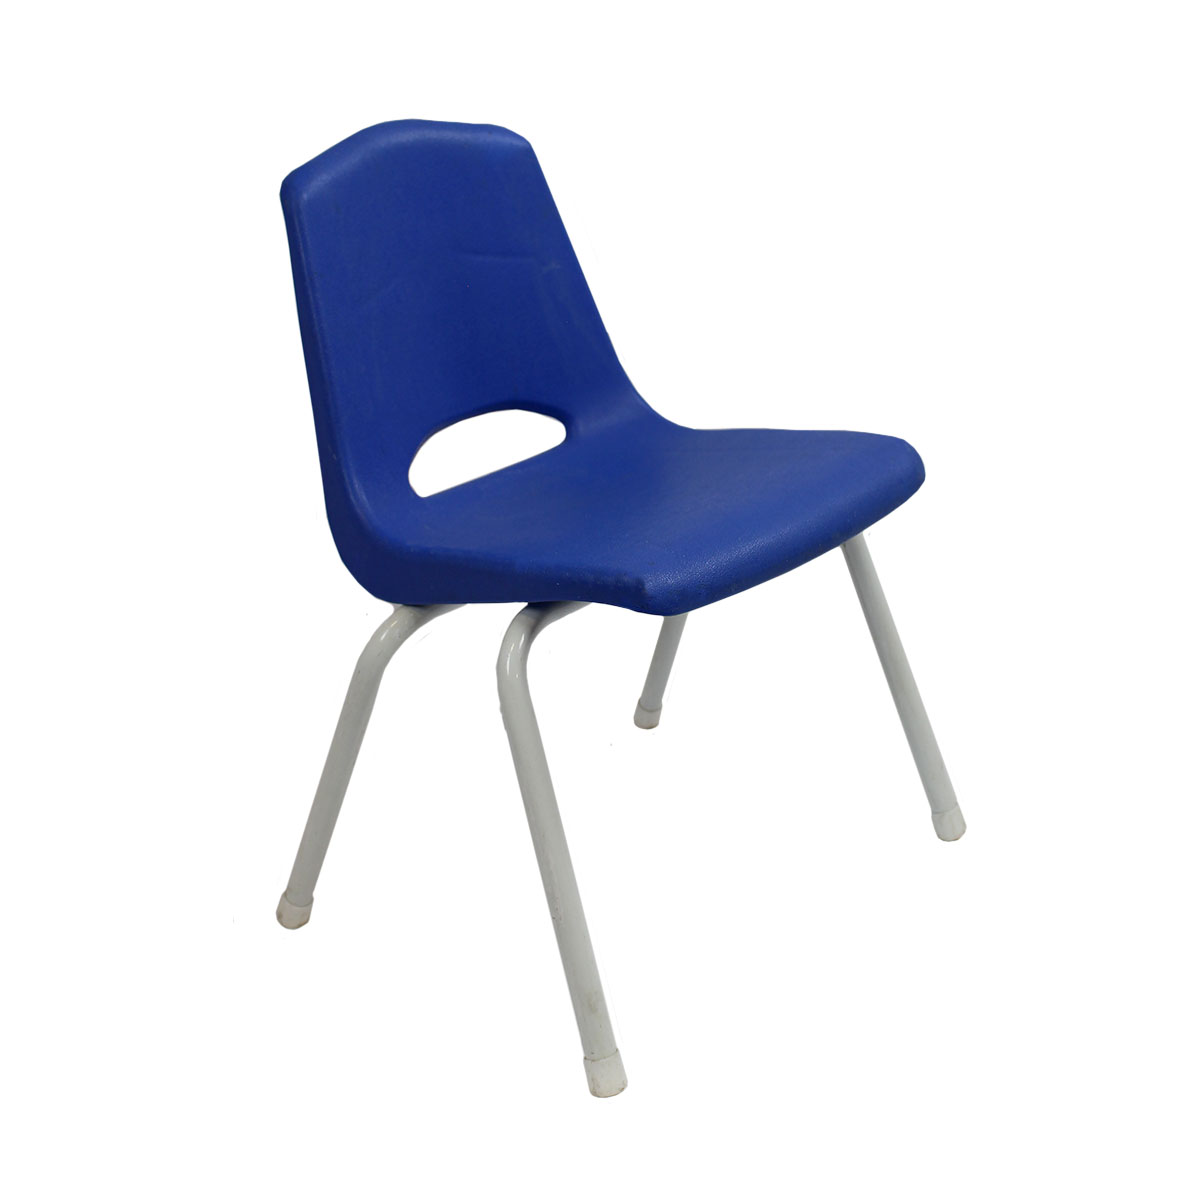 Chair Blue Seat White Leg Stacking Child Size 14